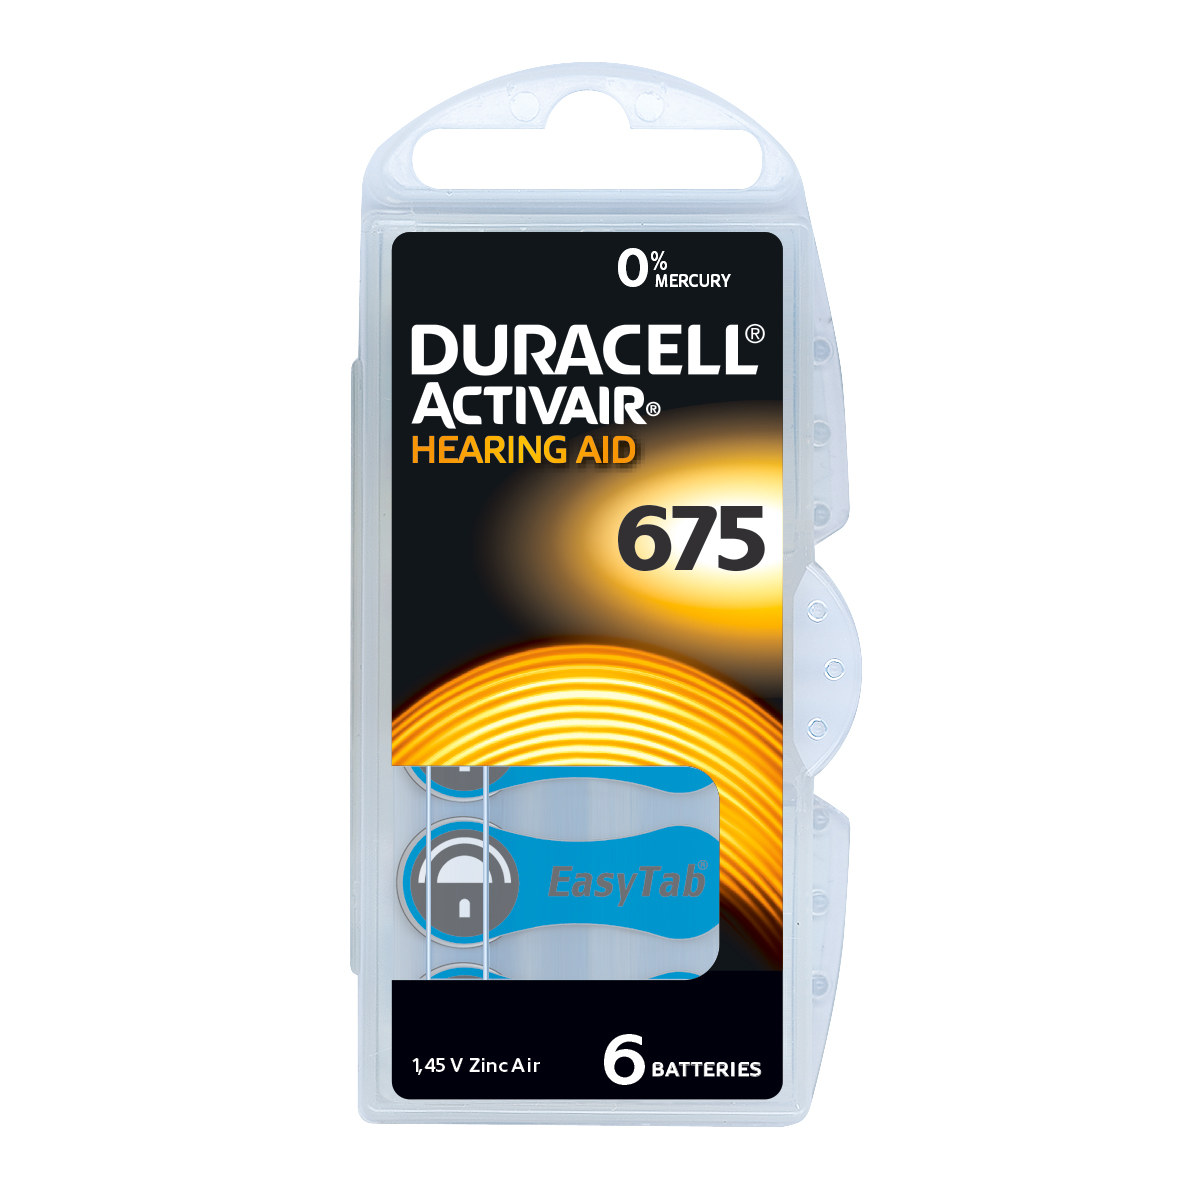 Duracell Activair Pack 6 Hearing aid batteries Zinc Air No. 675, blister